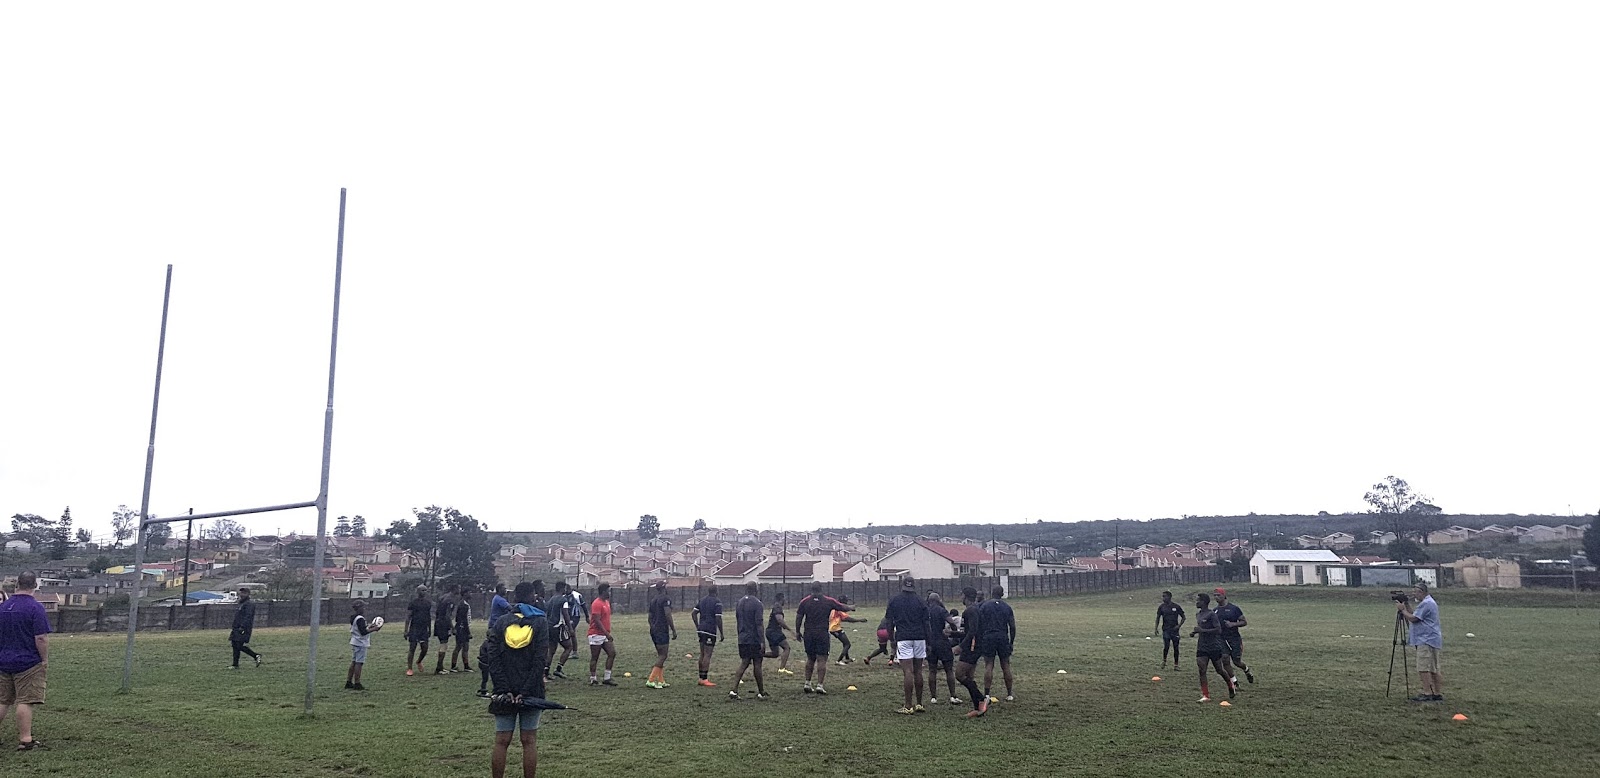 Swallows Rugby Club home ground in Mdantsane, Eastern Cape